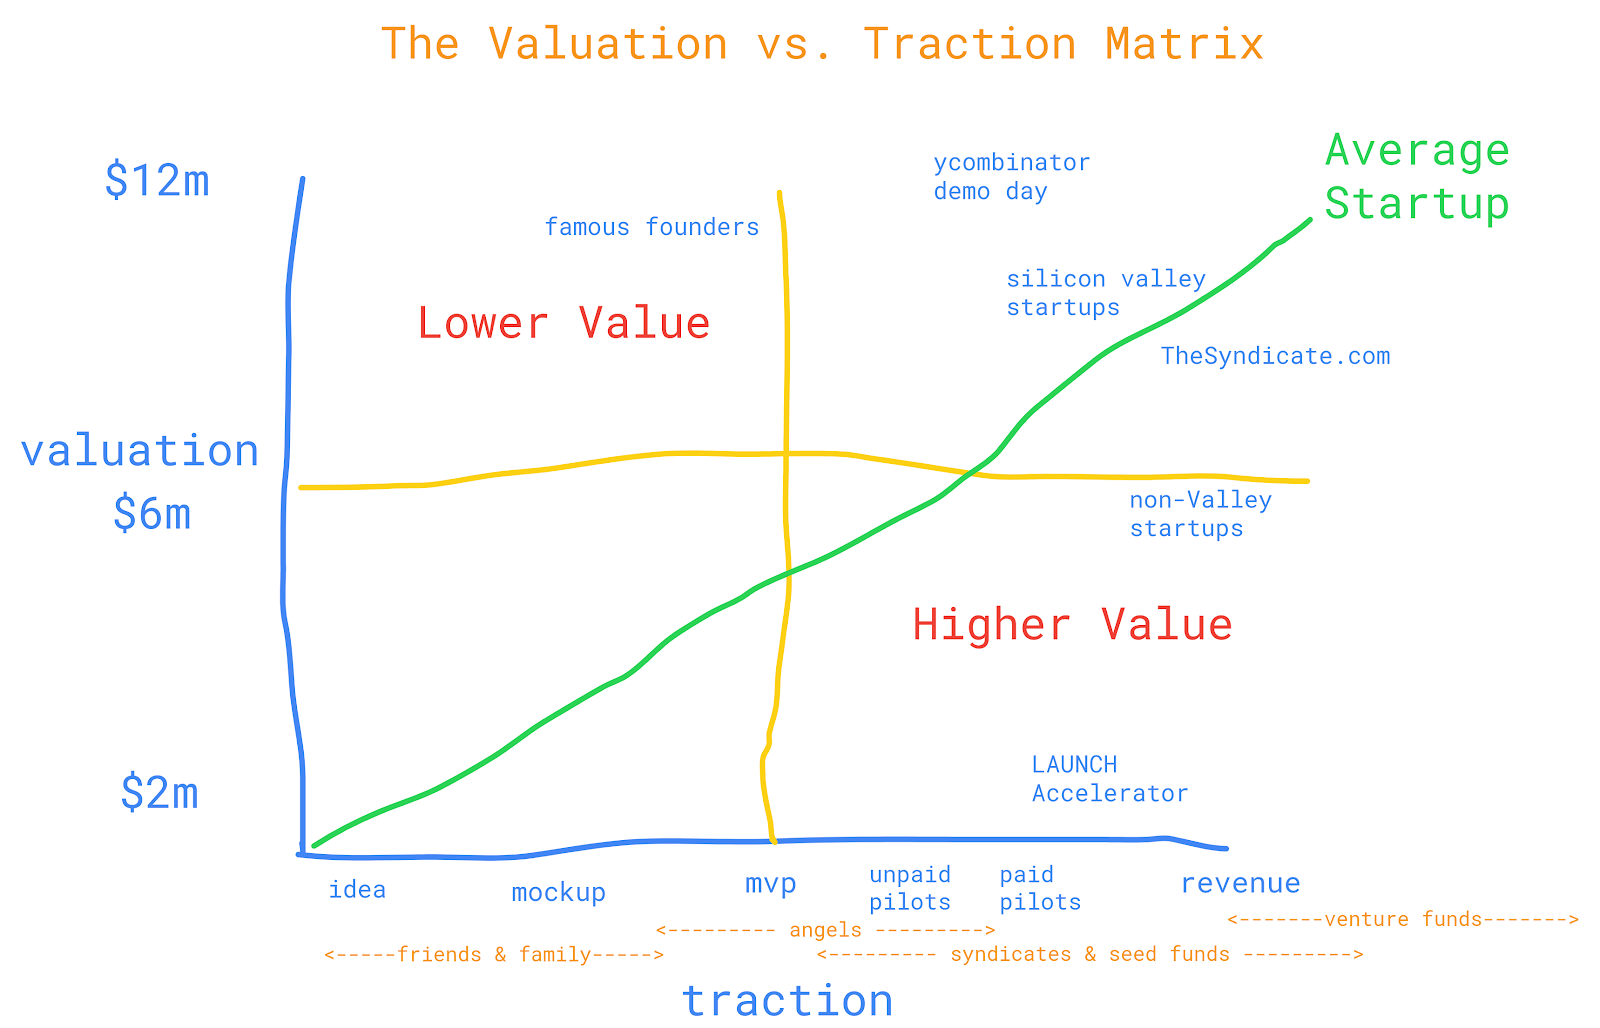 The Valuation vs. Traction Matrix